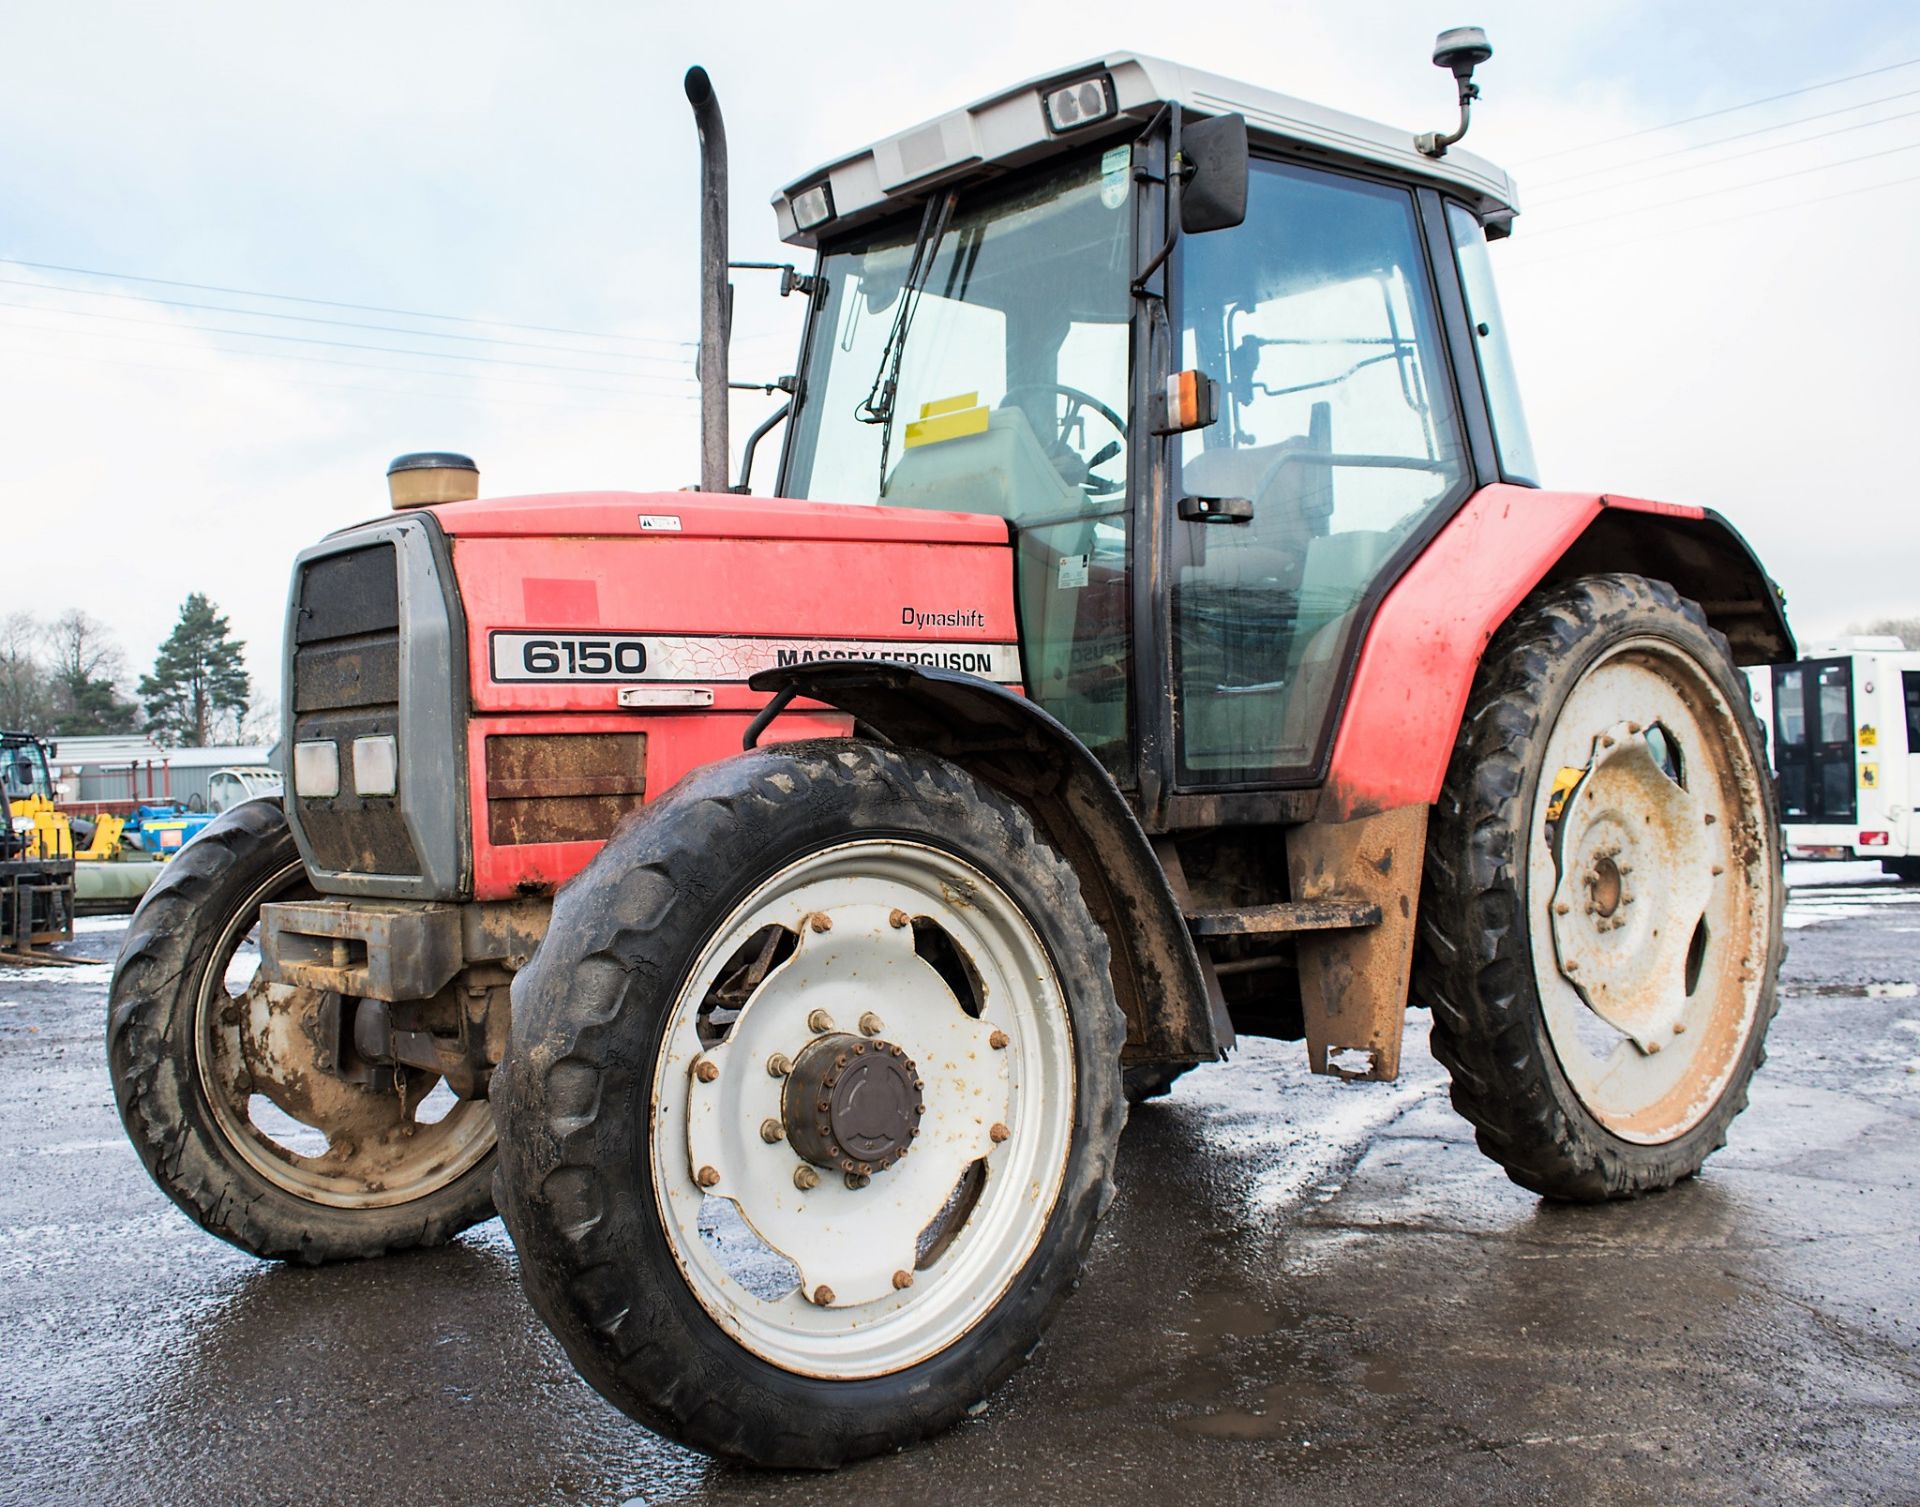 Massey Ferguson 615 Dynashift 4 wheel drive tractor